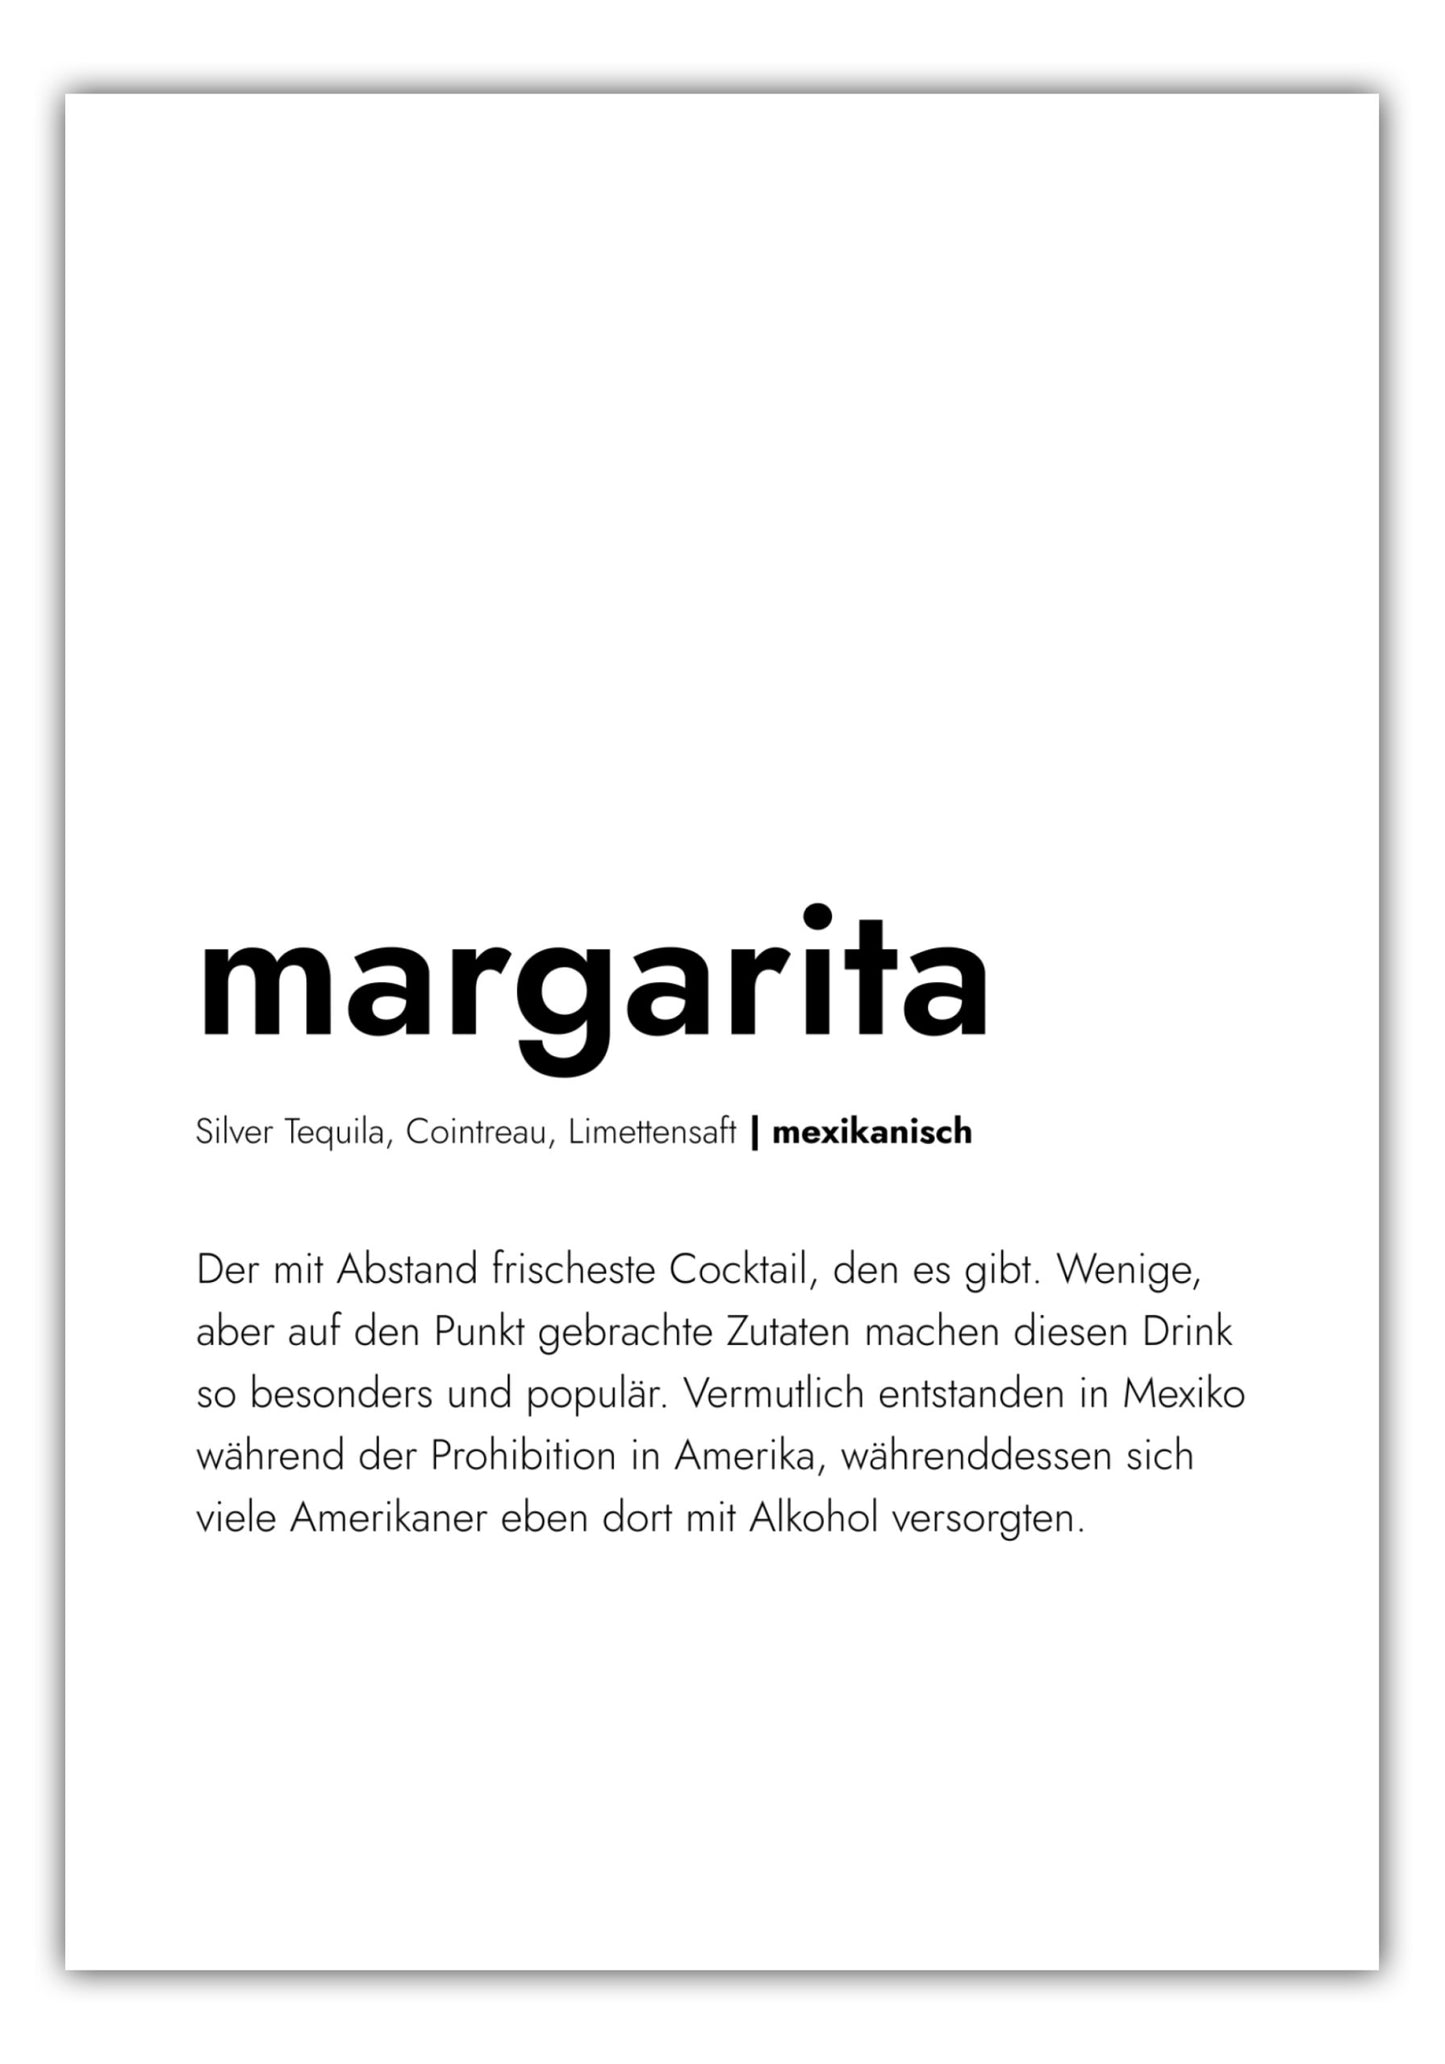 Poster Margarita - Definition